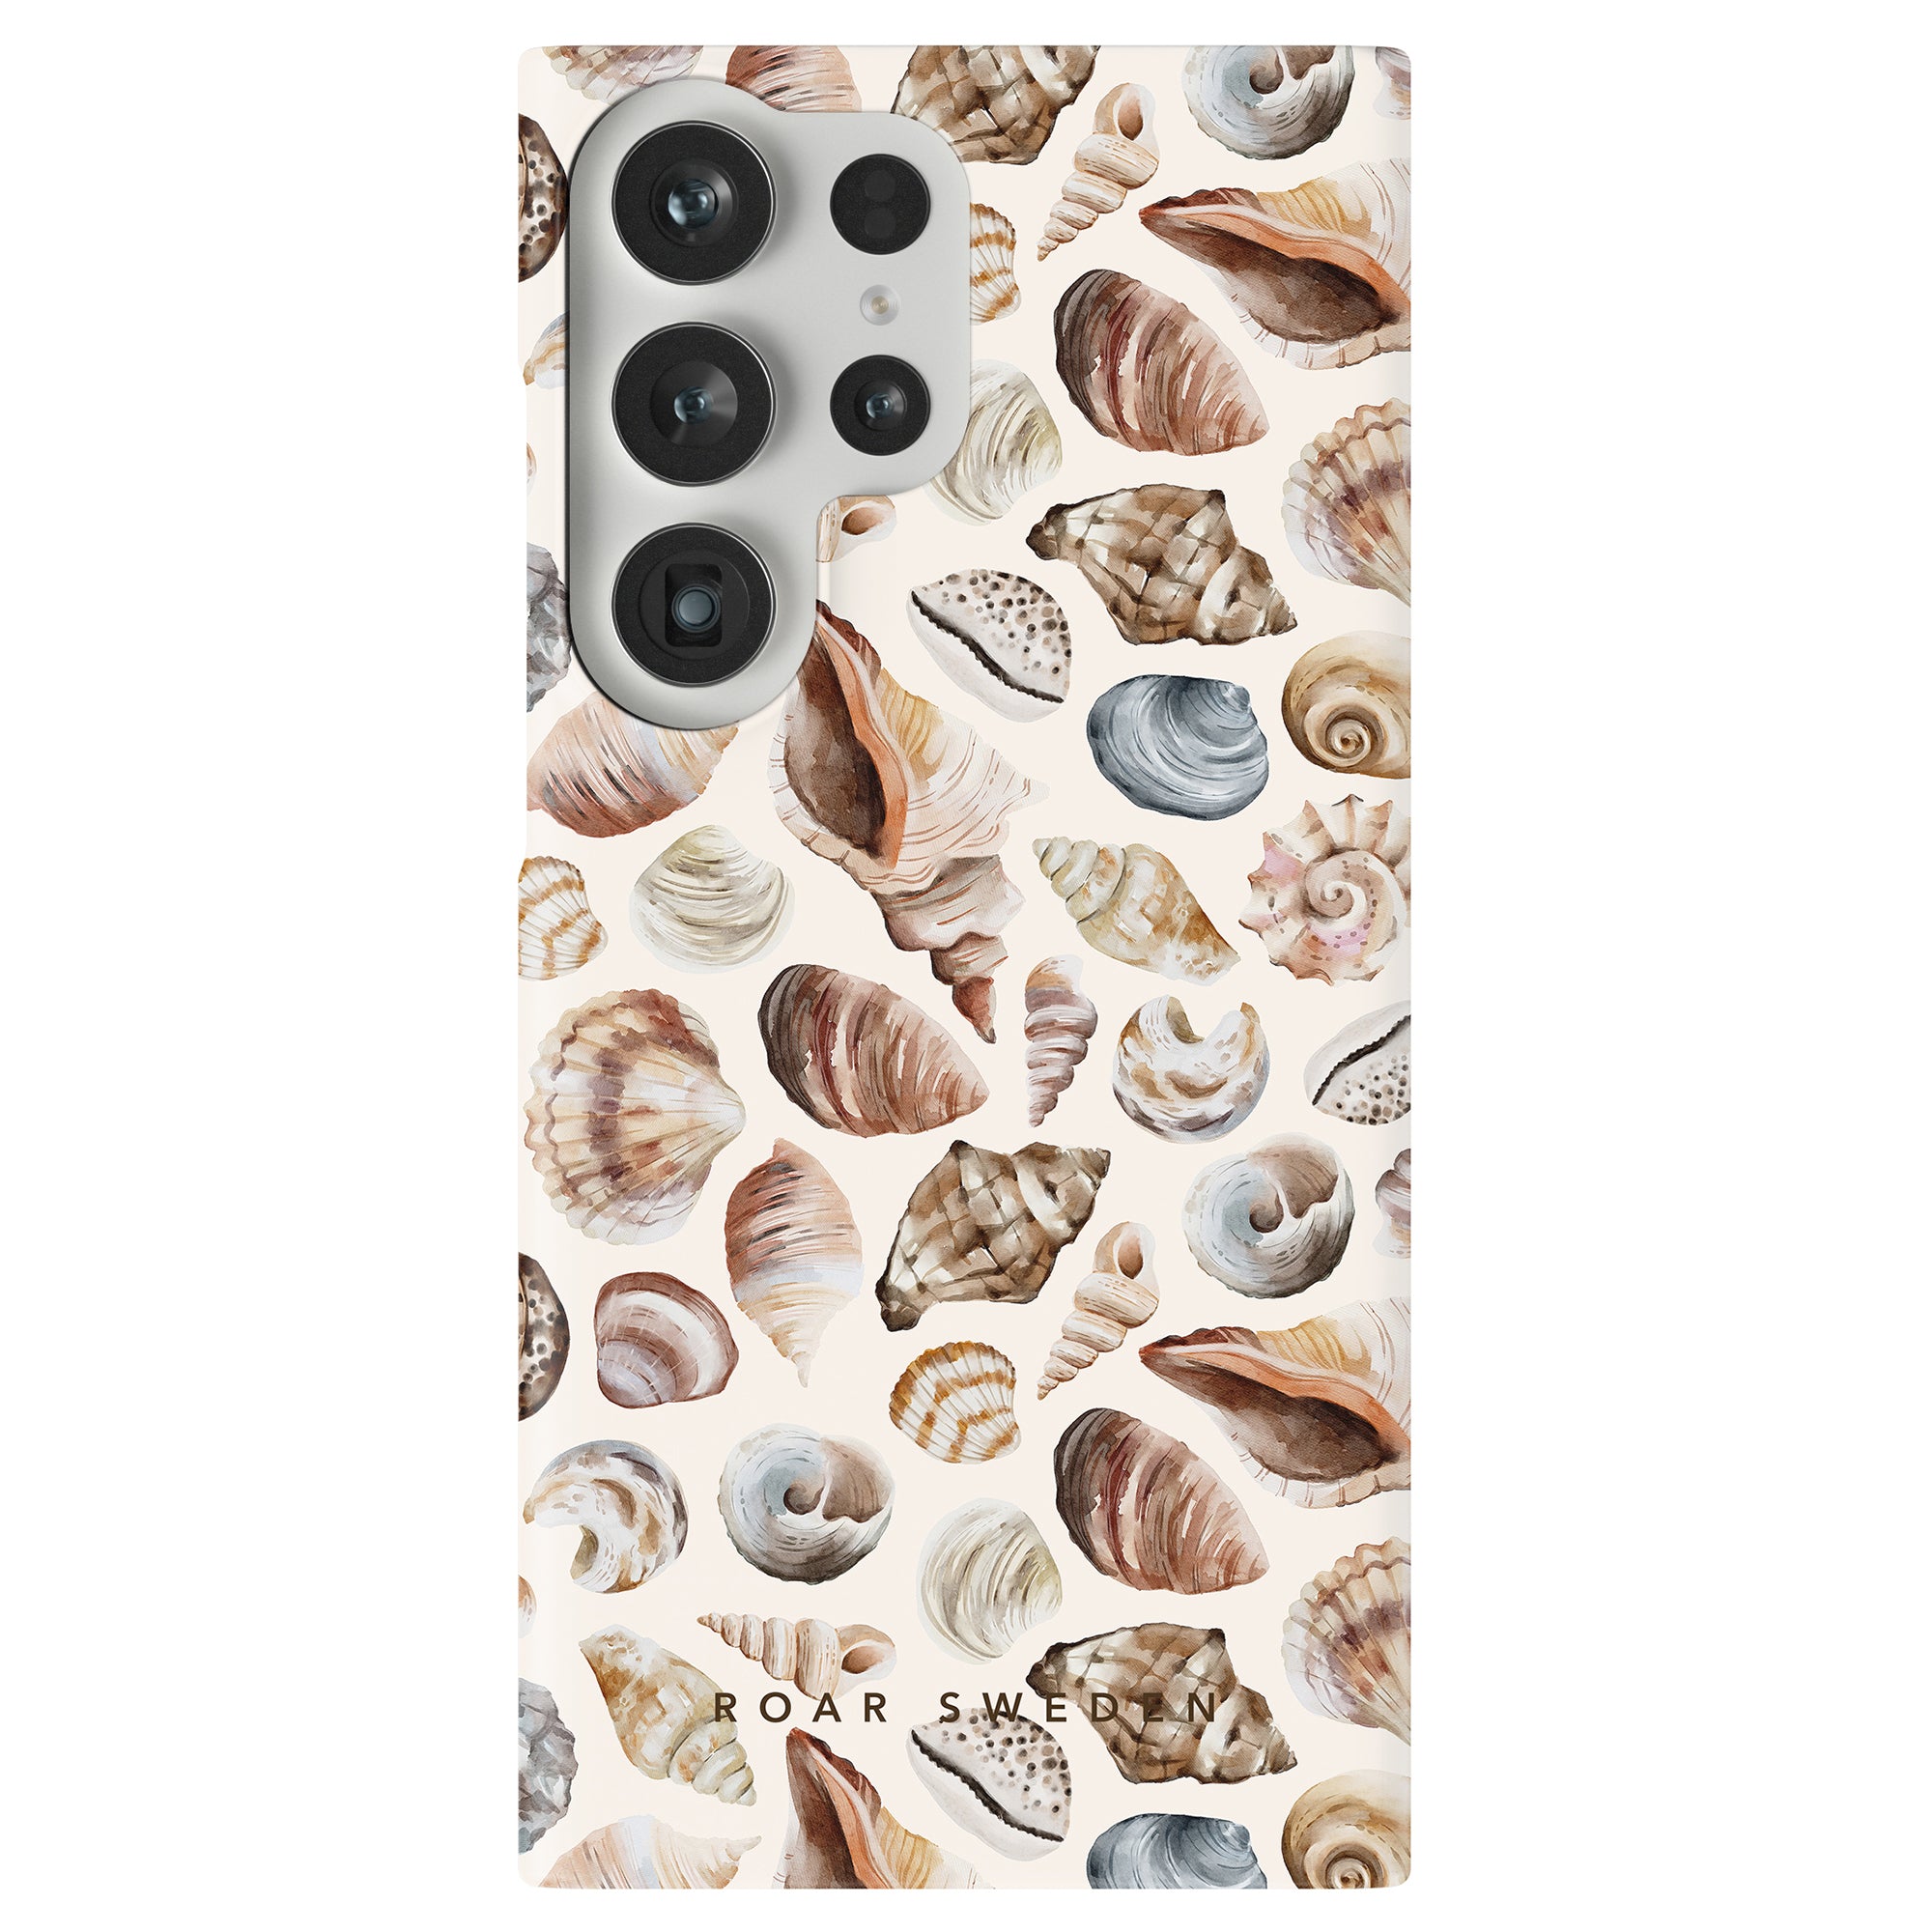 A smartphone with a Beach Shells - Slim case featuring a triple-lens camera setup.